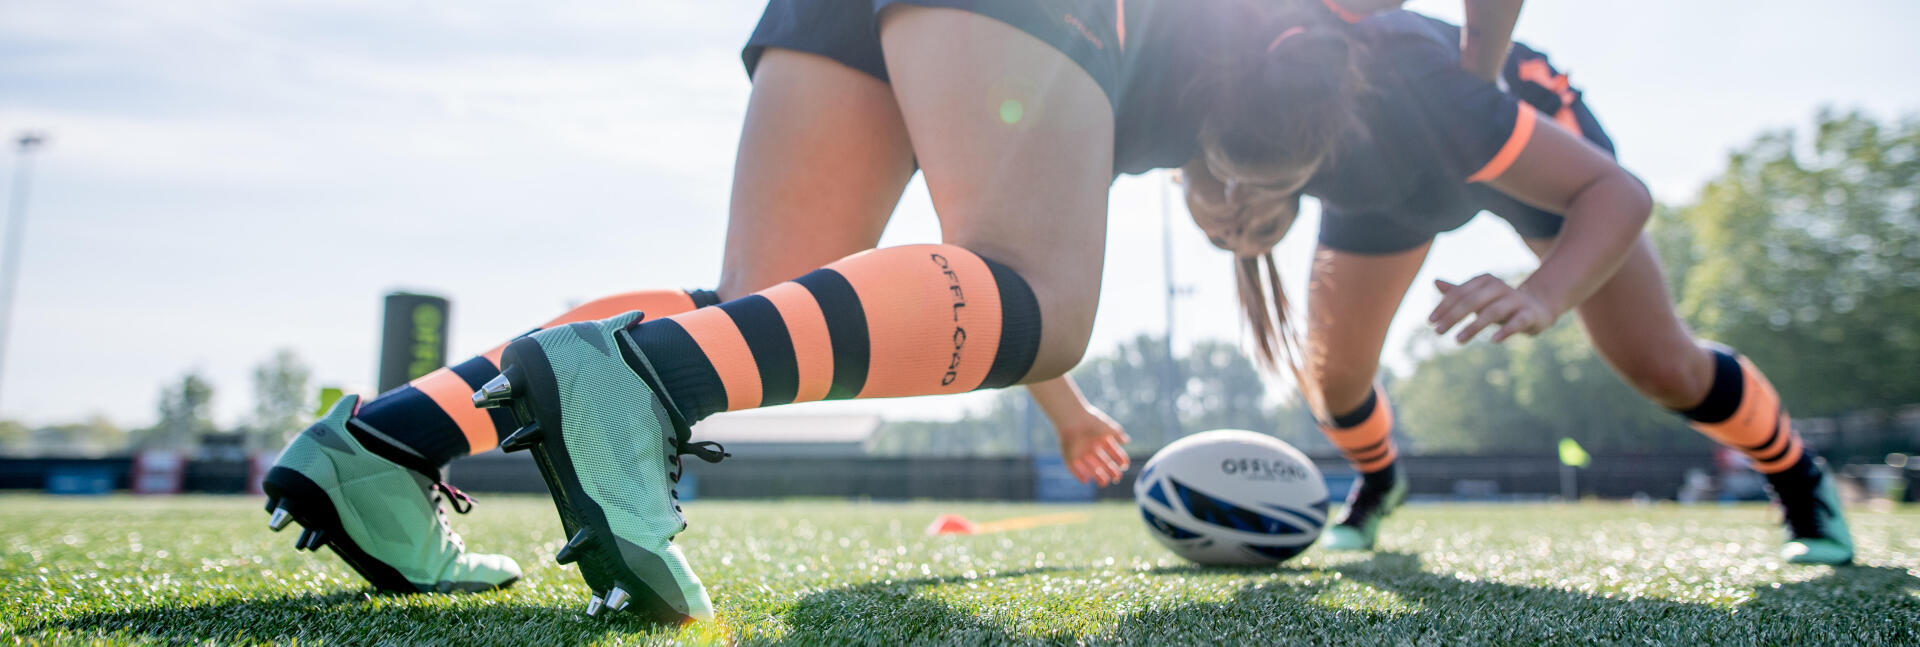 conseils-skills-rugby-comment-se-positionner-en-mêlée